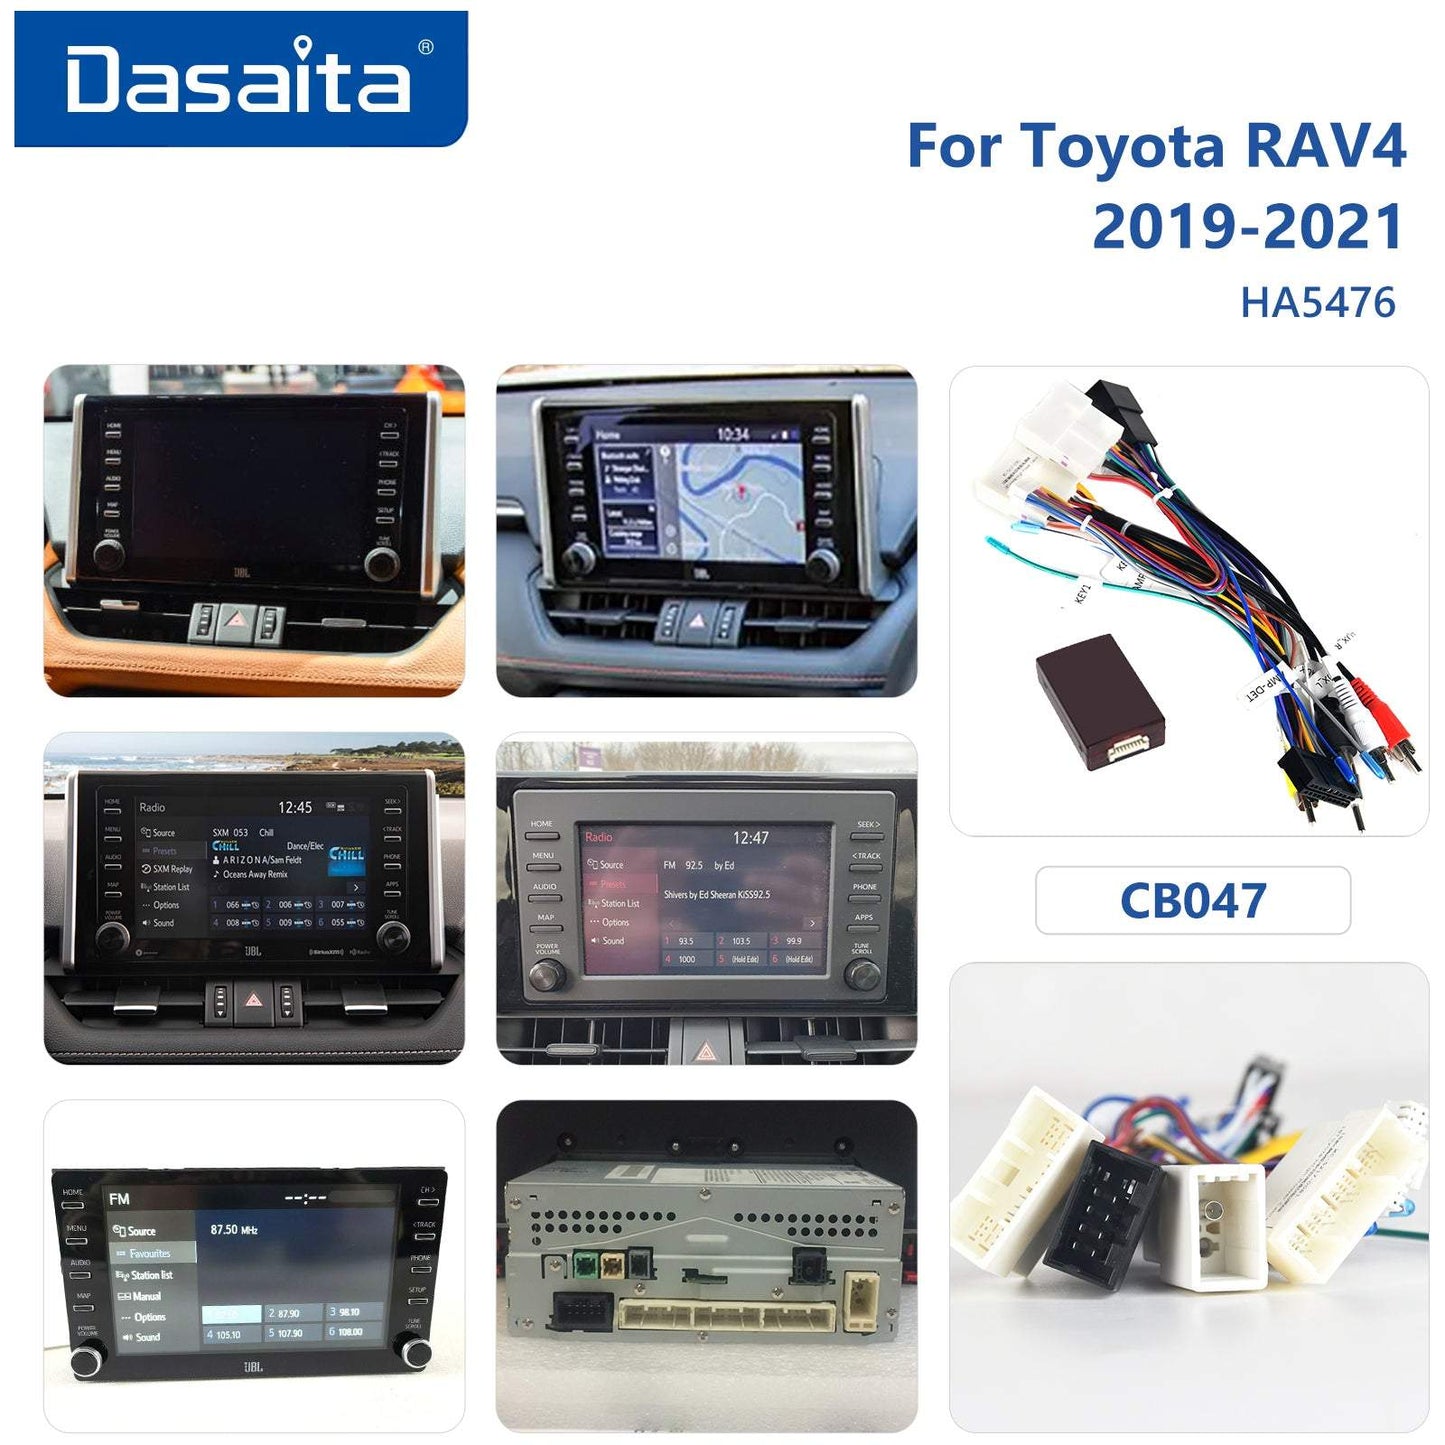 Dasaita Vivid11 Toyota RAV4 2019 2020 2021 Car Stereo 10.2 Inch Carplay Android Auto PX6 4G+64G Android11 1280*720 DSP AHD Radio